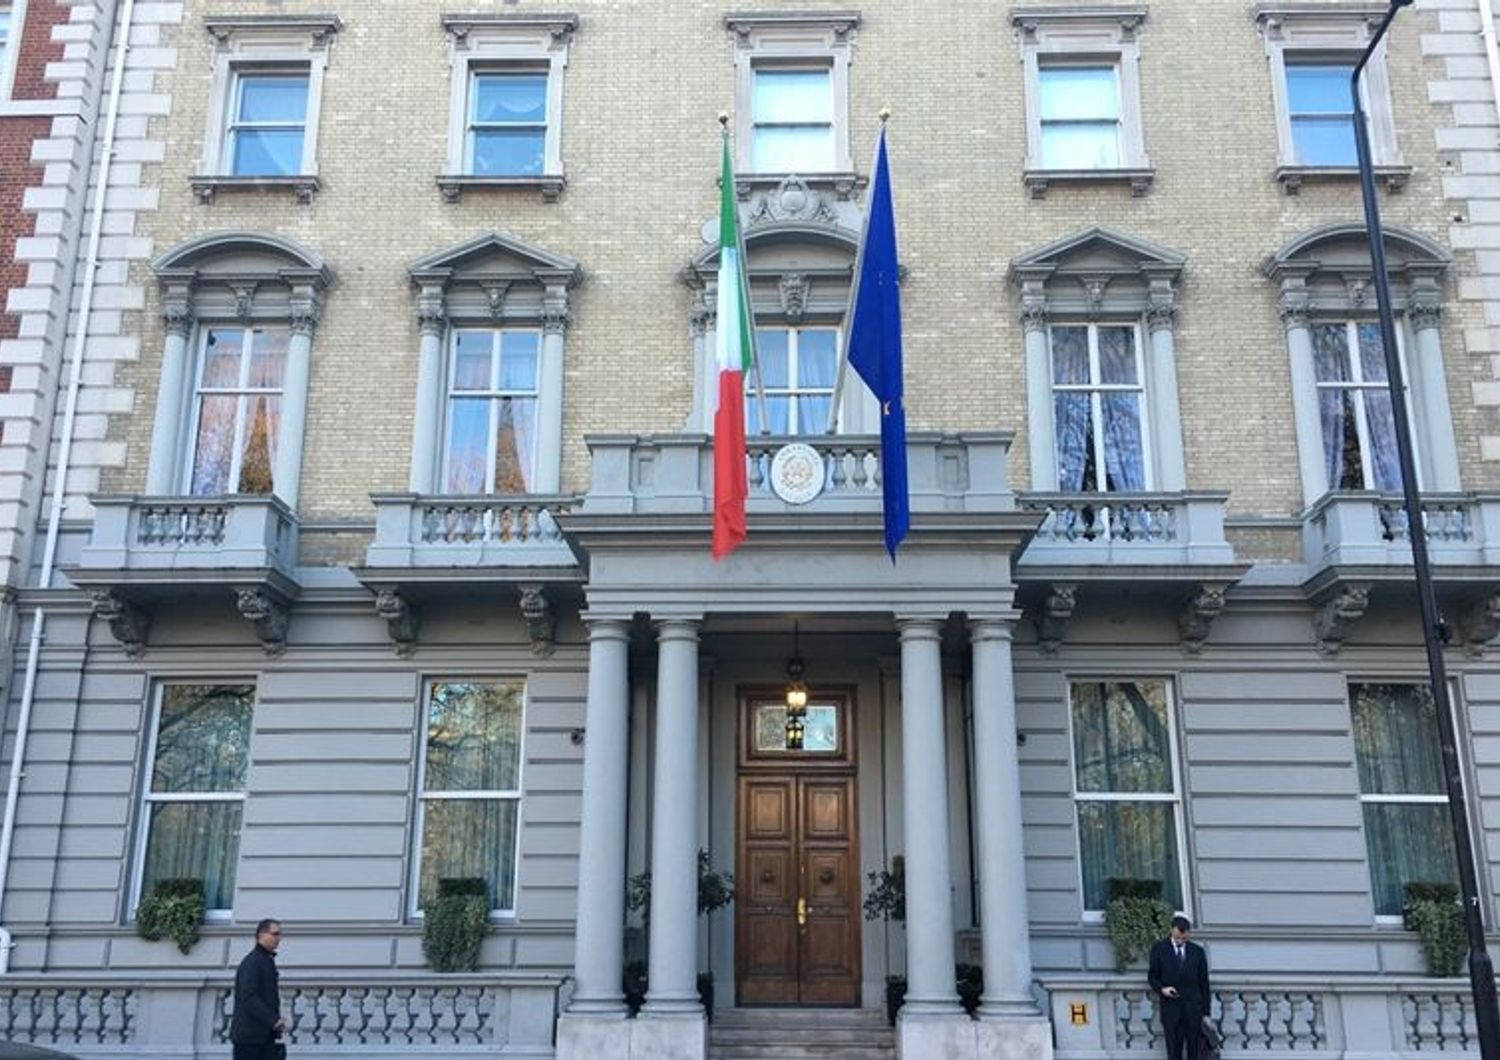 Ambasciata d'Italia a Londra. Nella capitale inglese vivono 500mila italiani&nbsp;&nbsp;